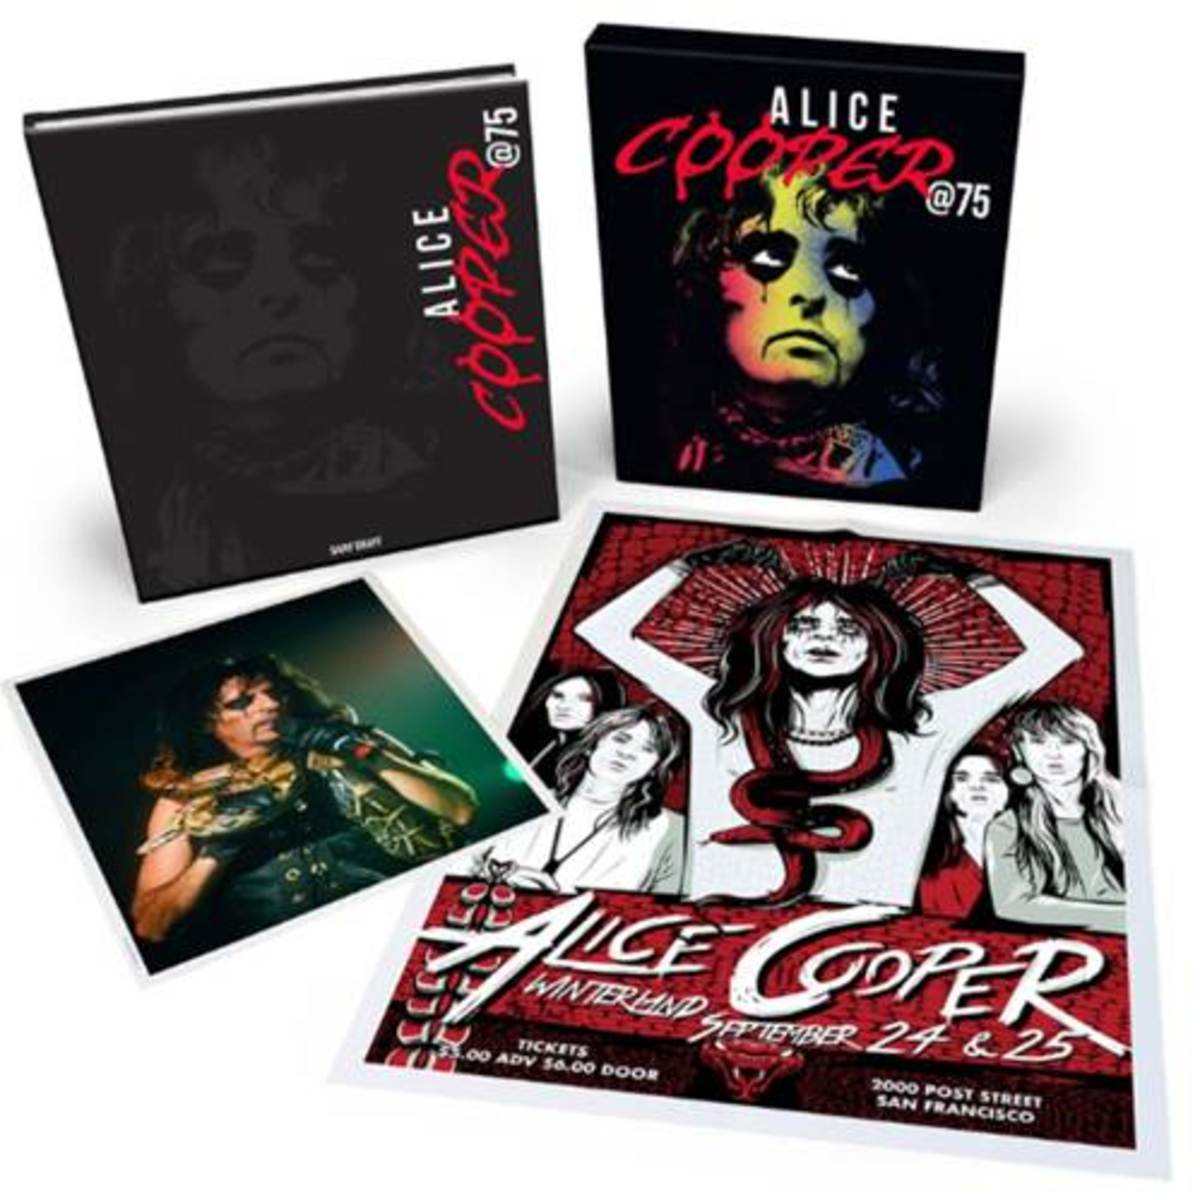 Alice Cooper at 75